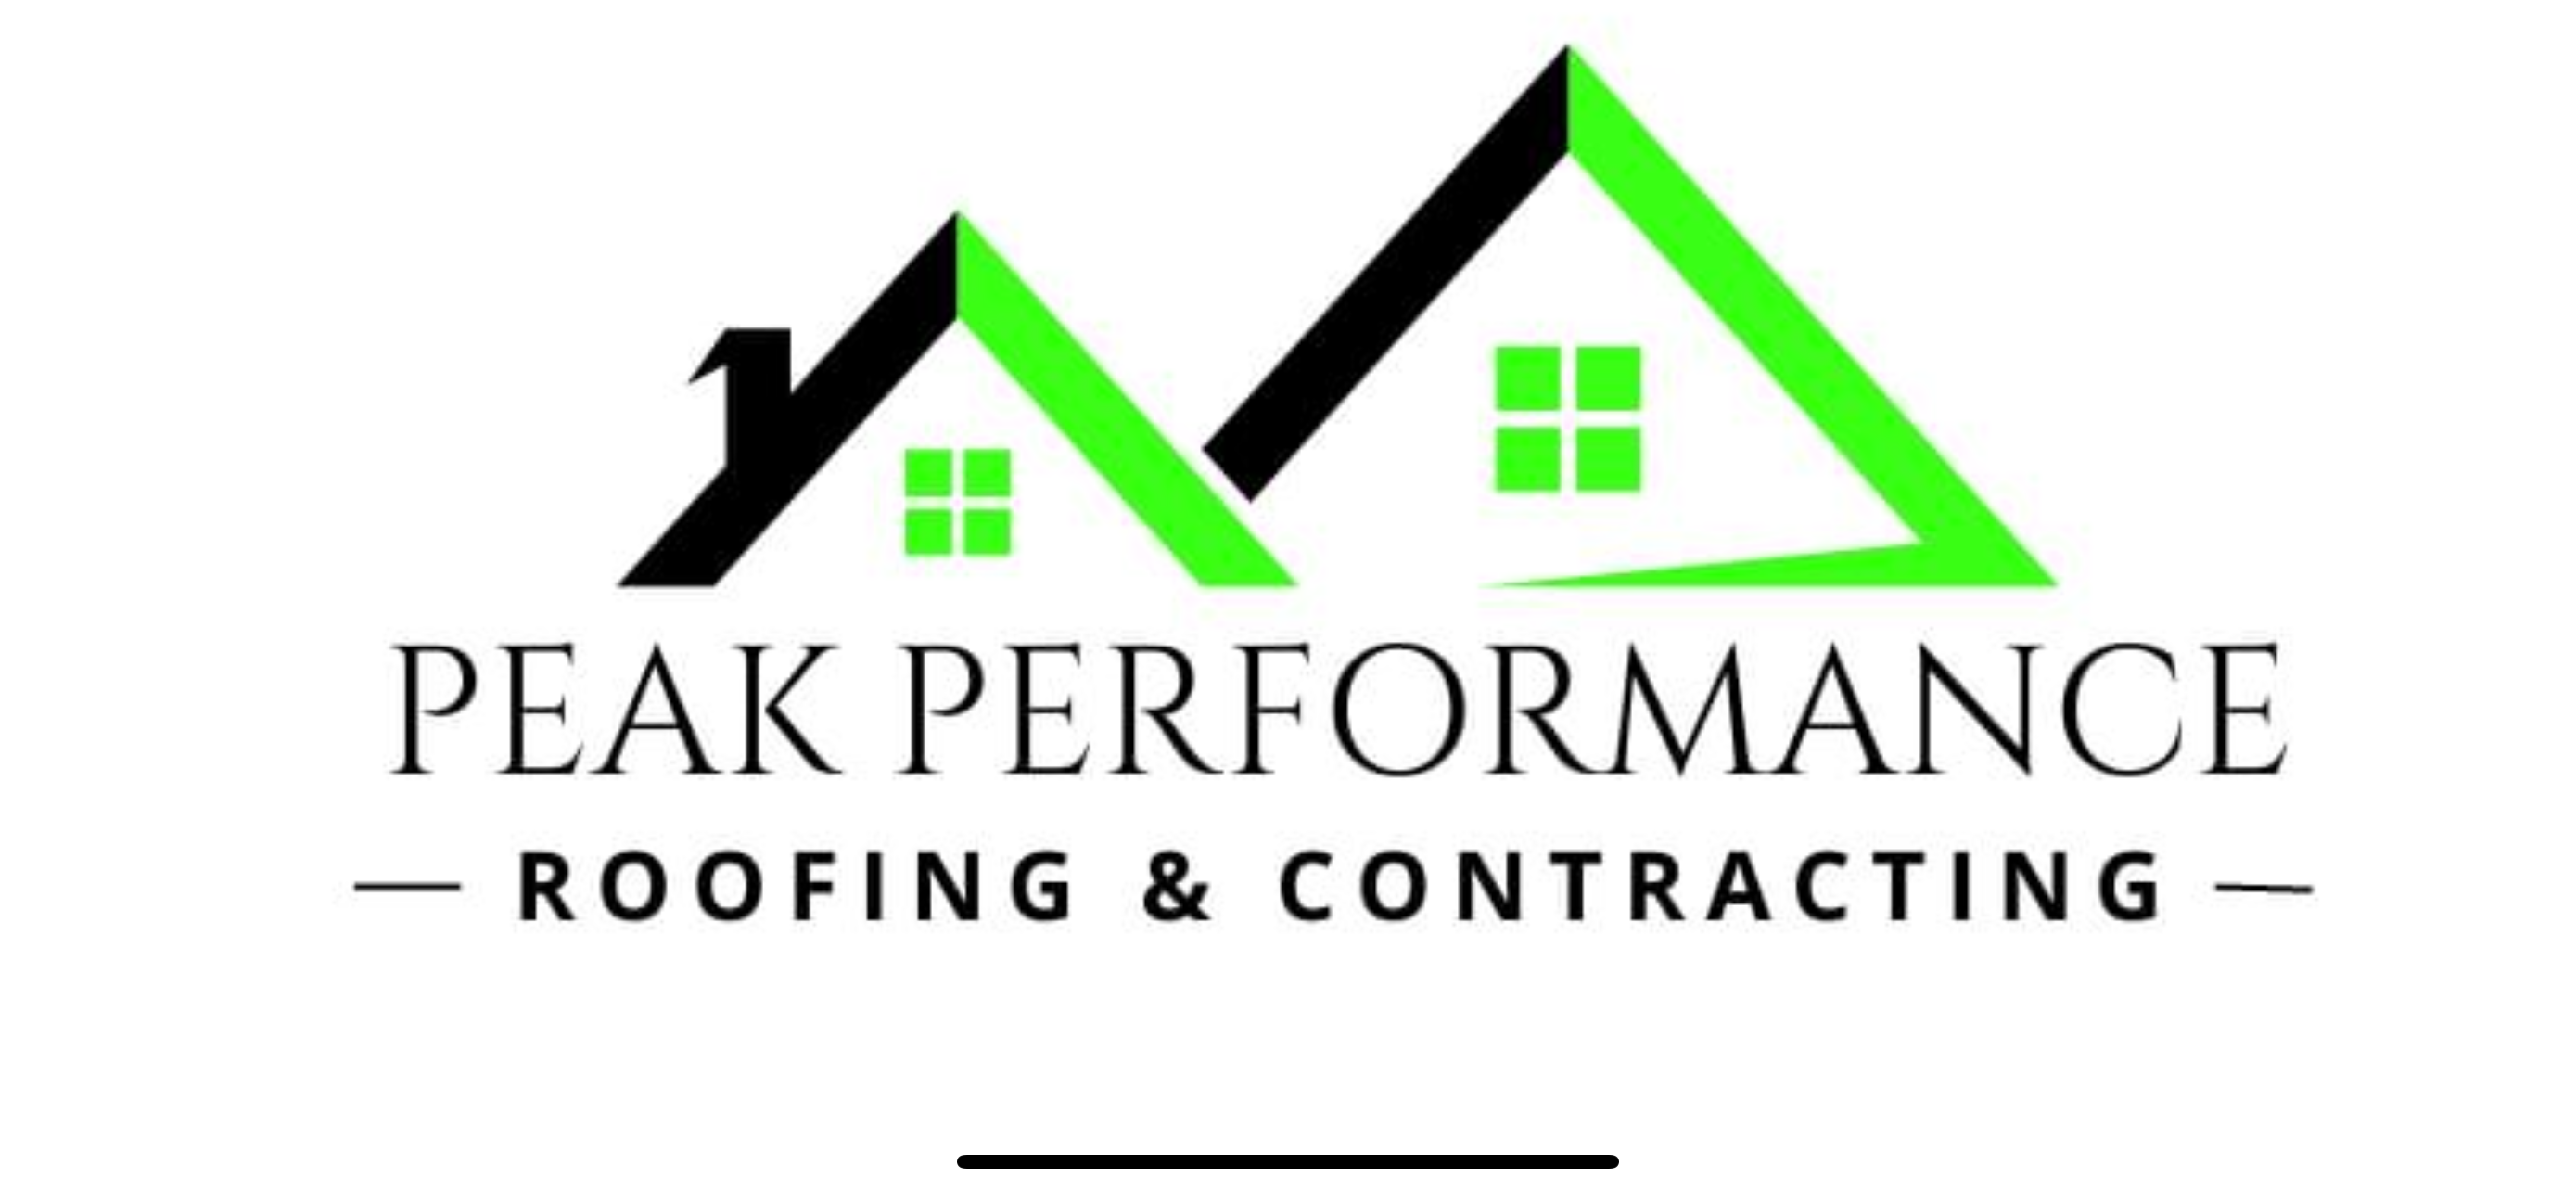 Peak Performance Roofing & Contracting 